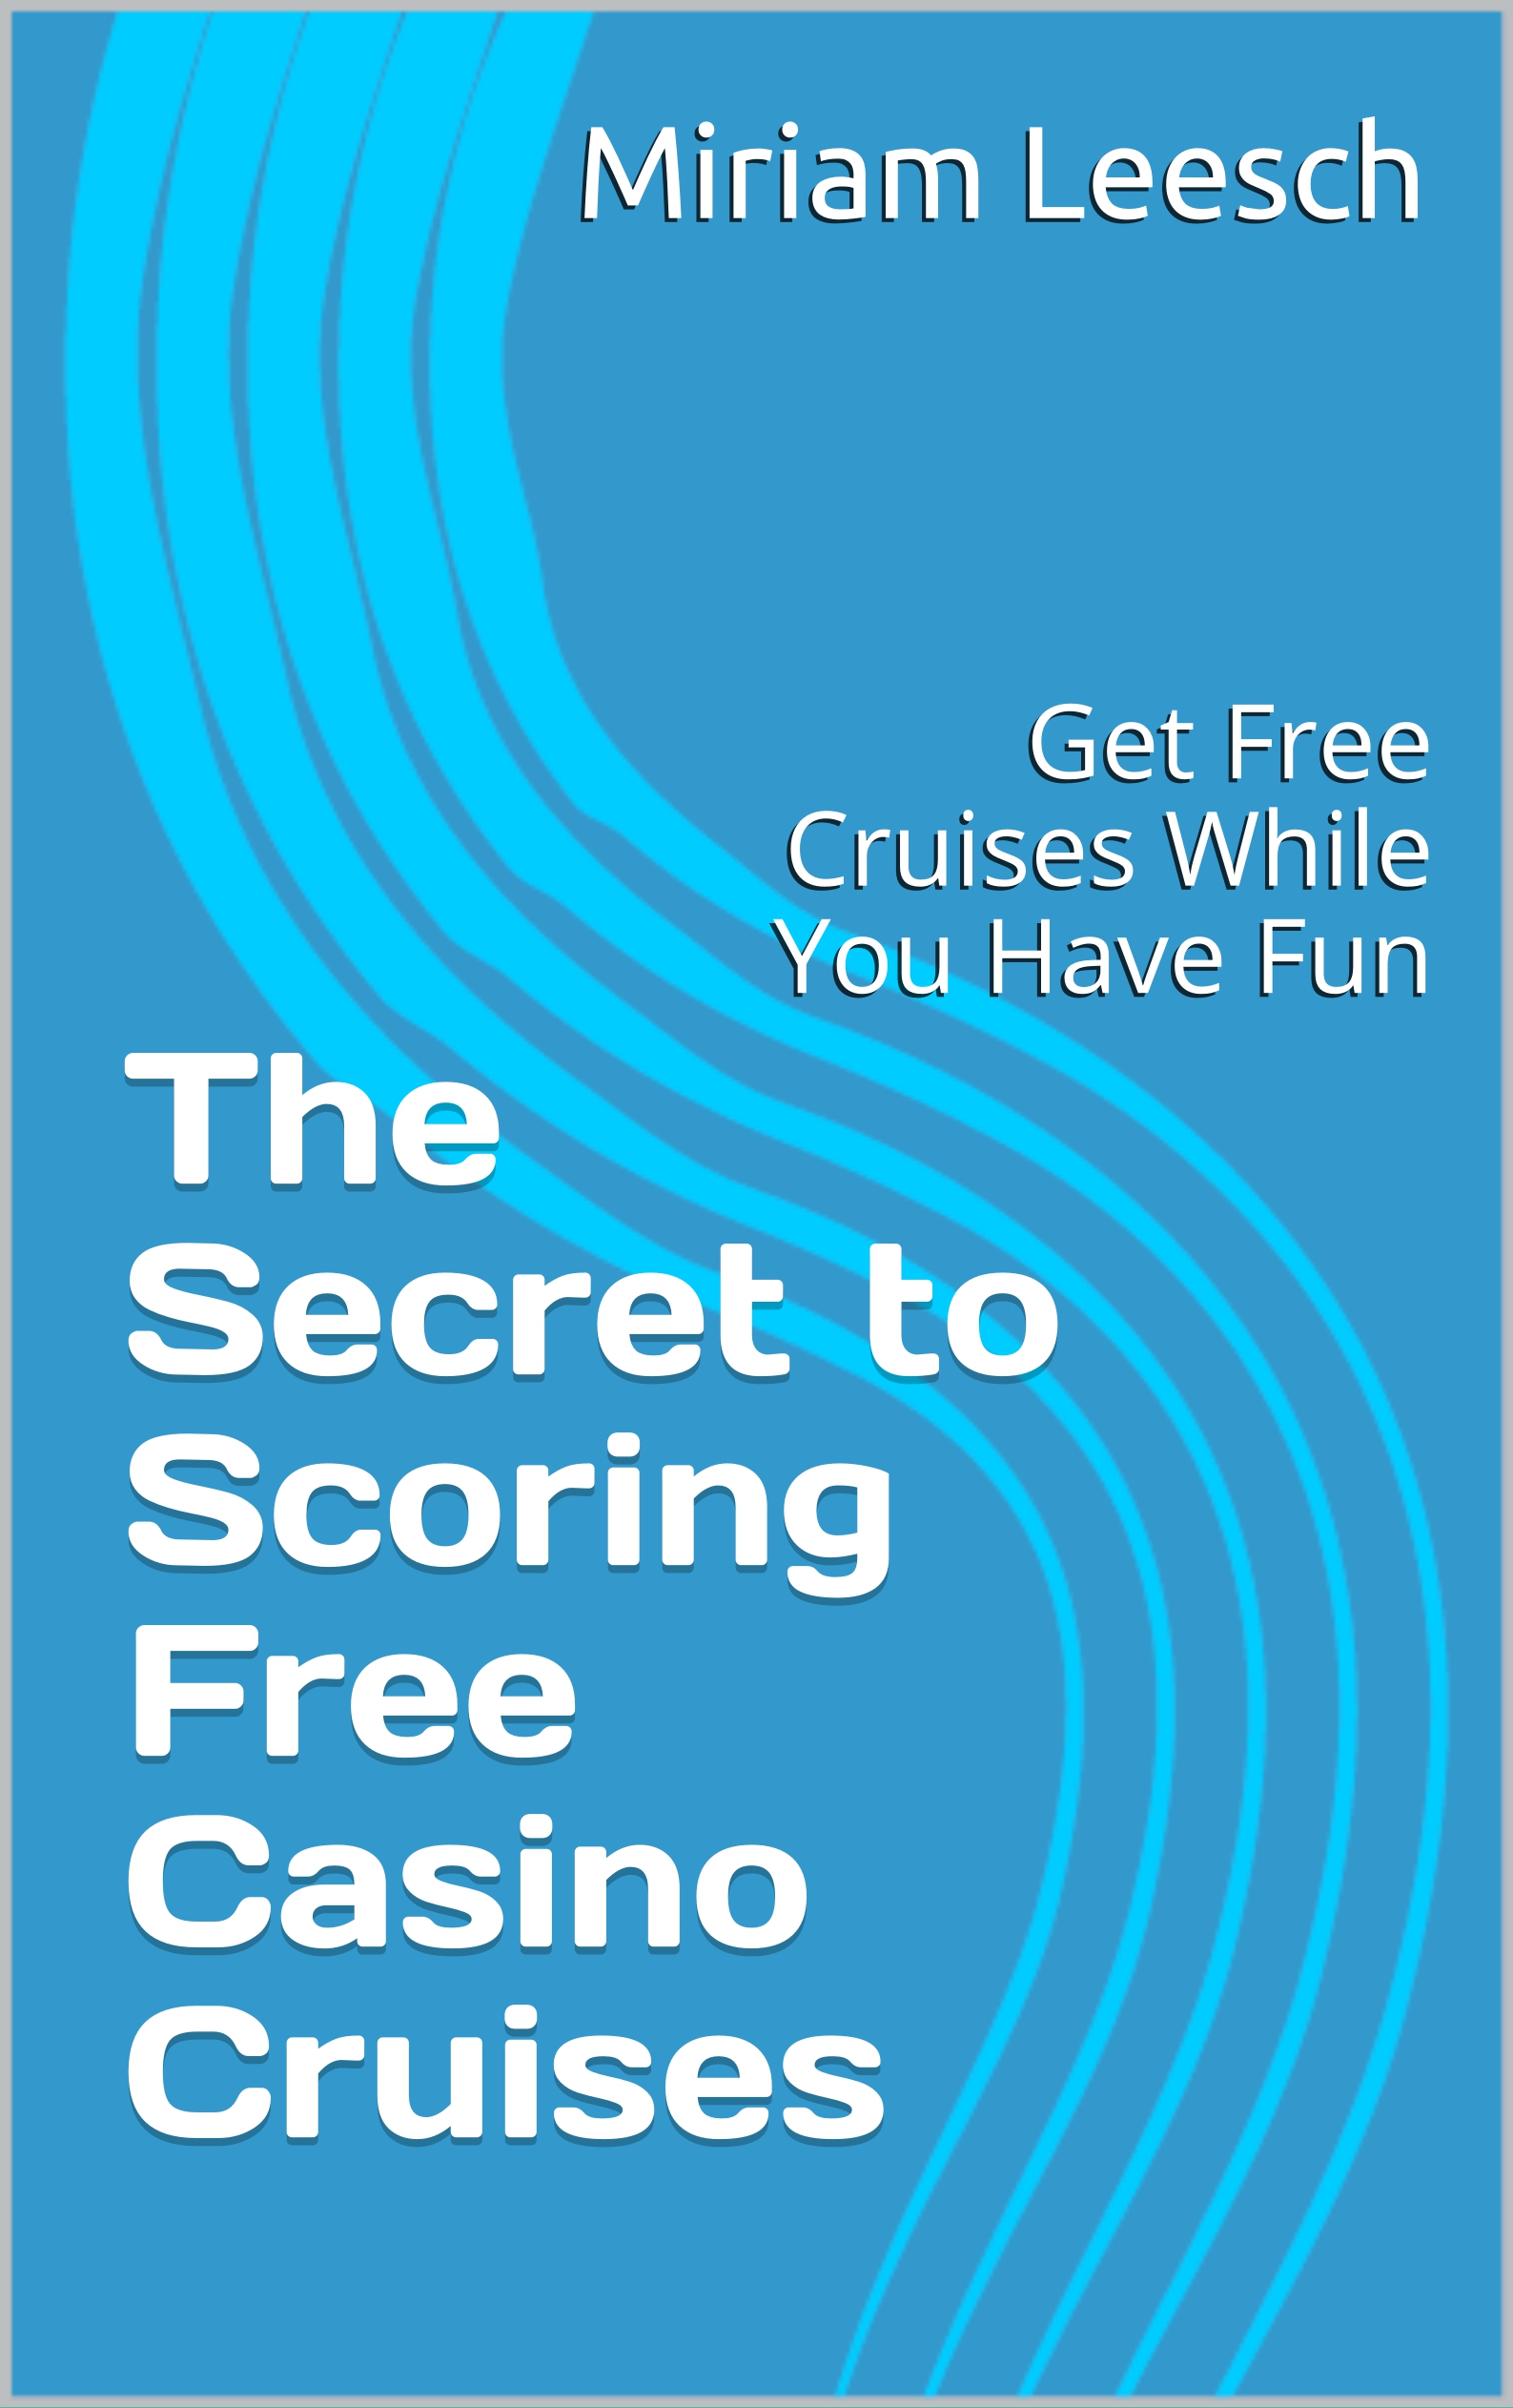 FREE: The Secret to Scoring Free Casino Cruises by Miriam Leesch